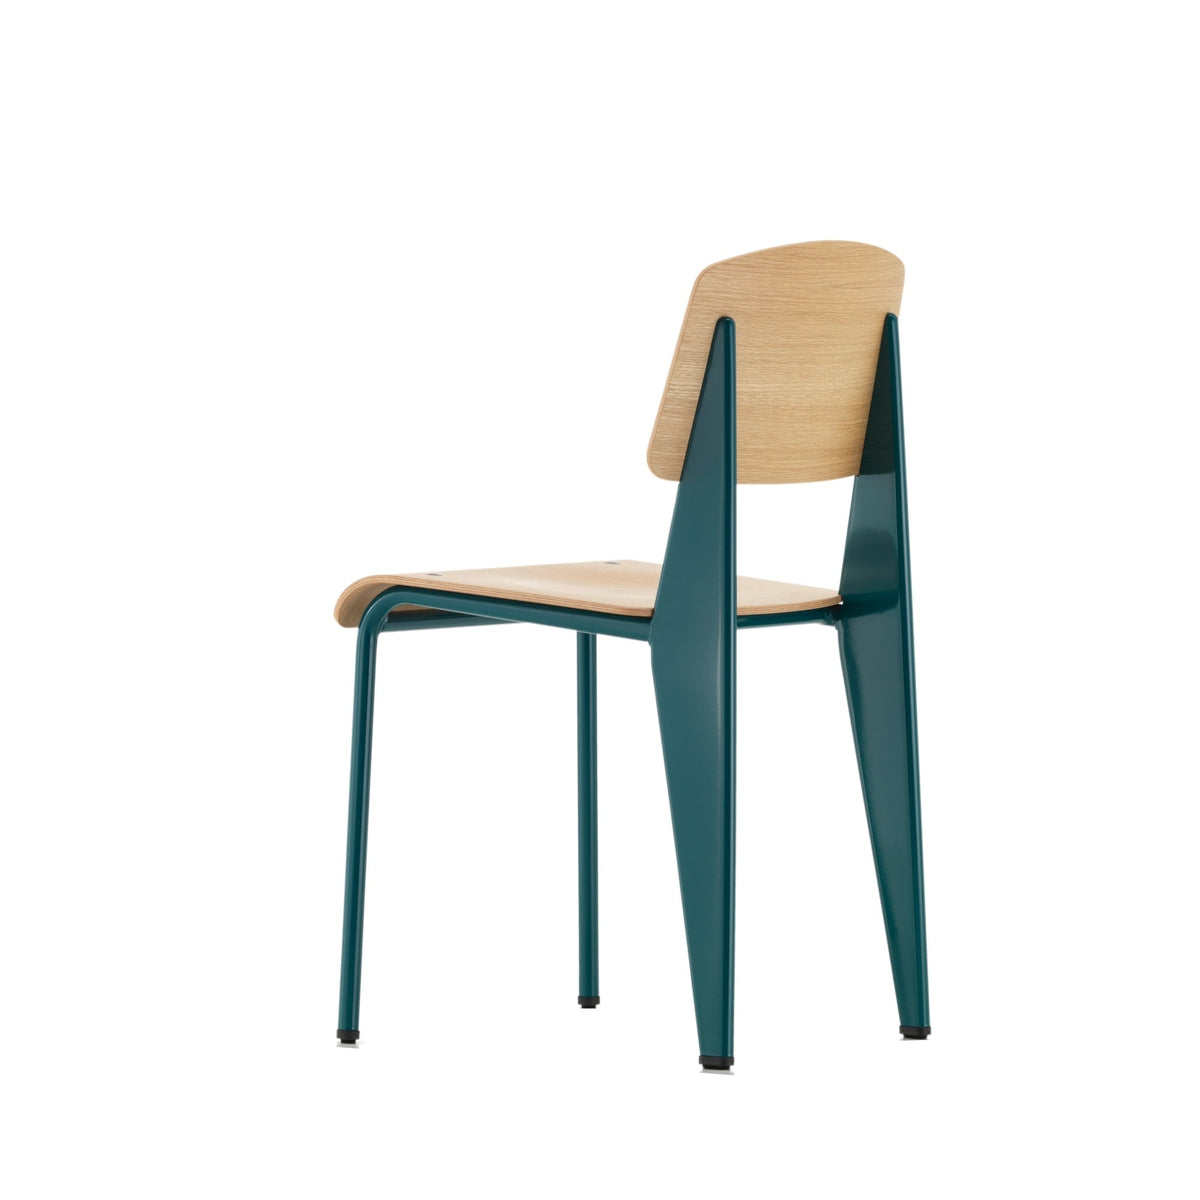 Vitra Standard tuoli tammi/bleu dynastie - Laatukaluste